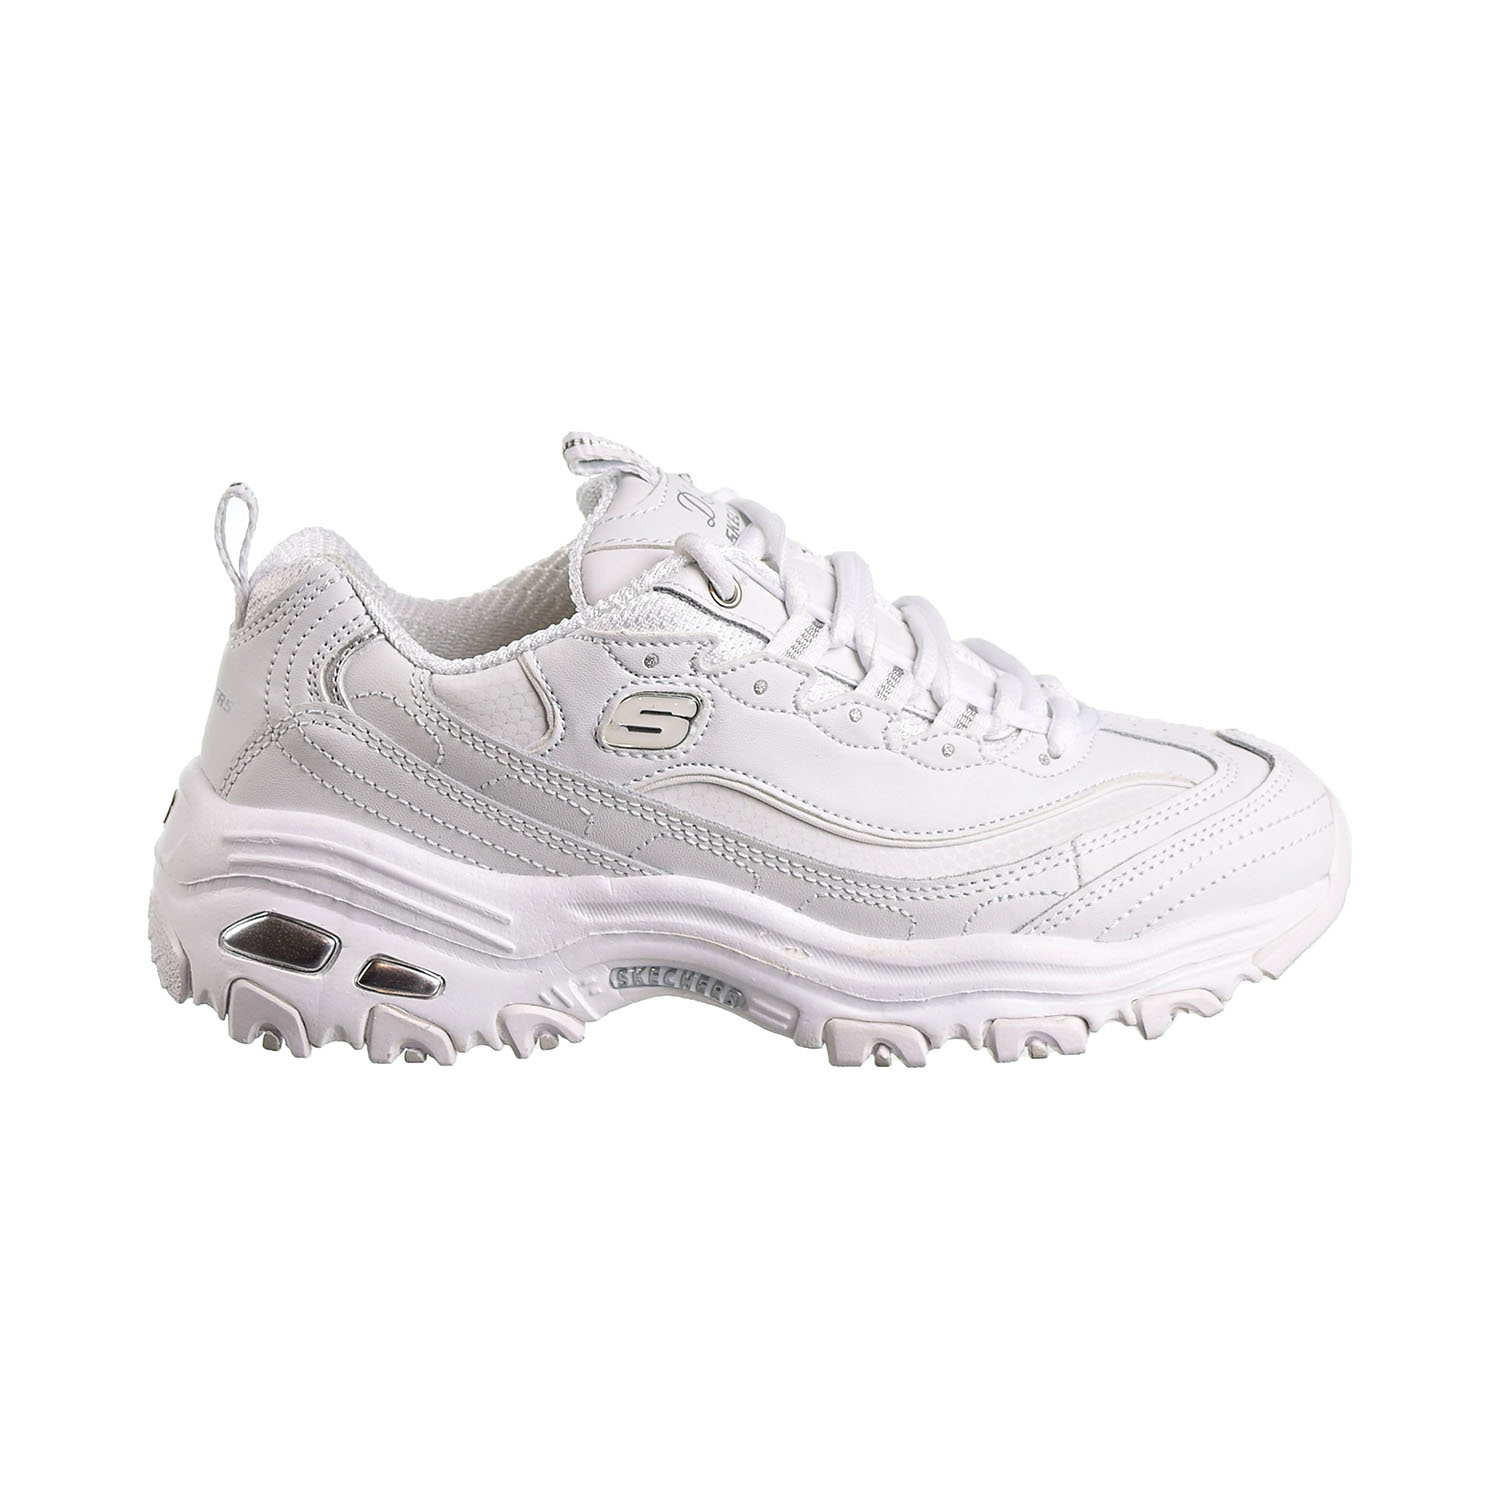 Skechers D'Lites Fresh Start Women's Shoes White/Silver 11931-wsl